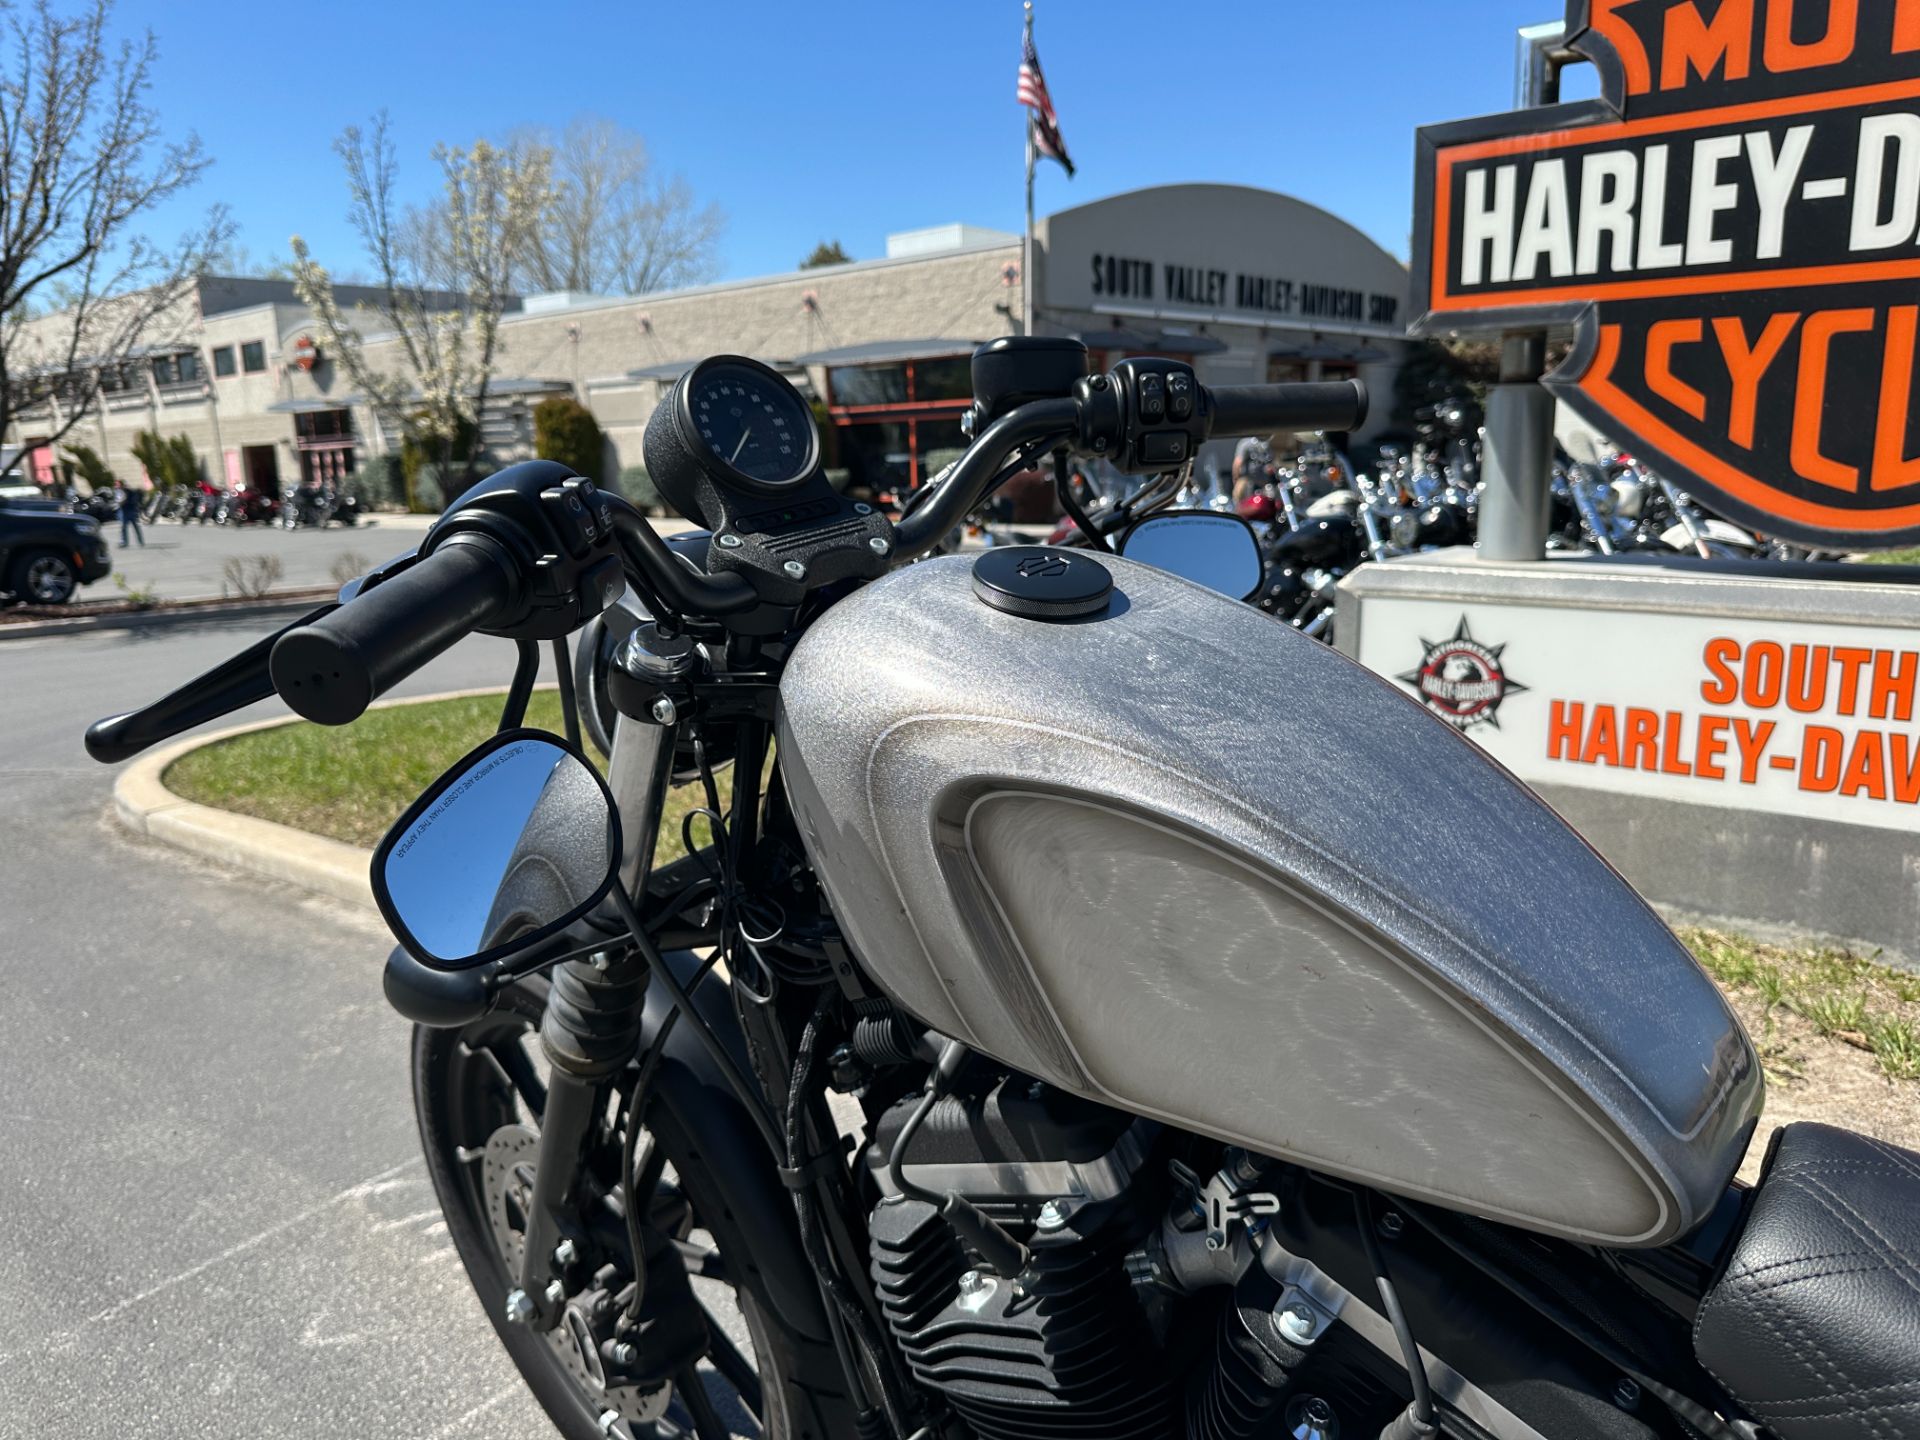 2020 Harley-Davidson Iron 883™ in Sandy, Utah - Photo 12